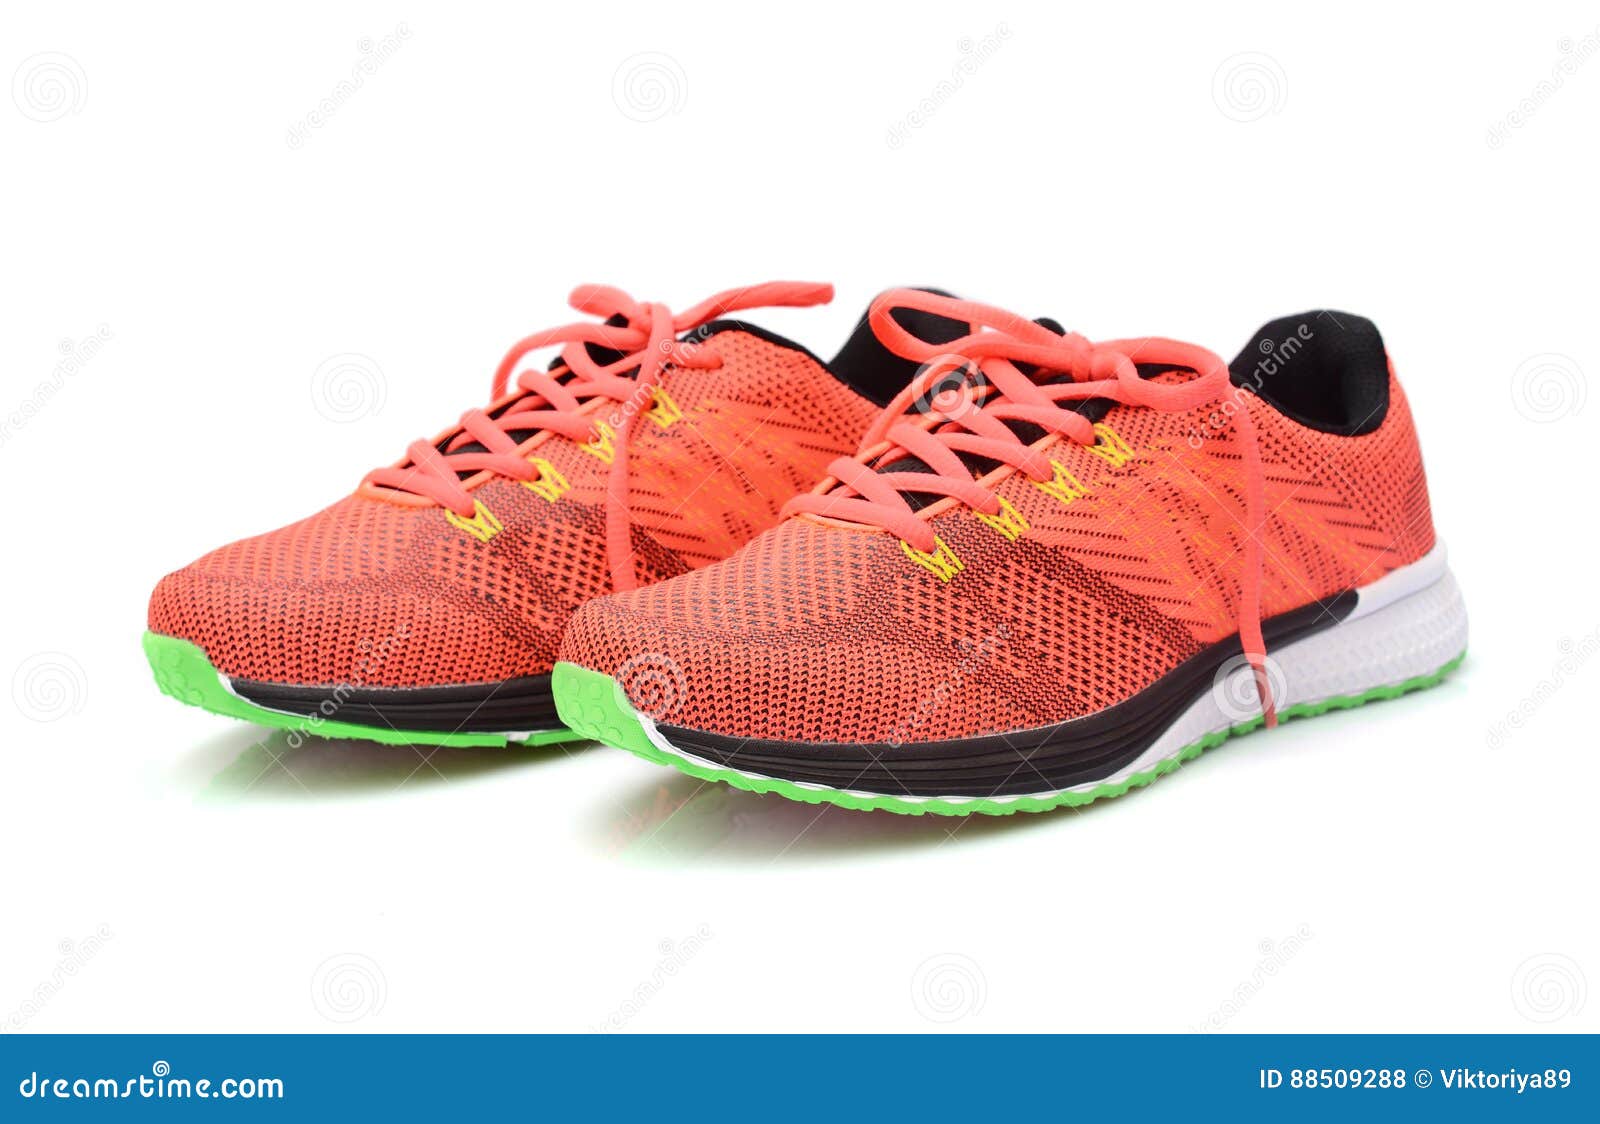 Pair of New Bright Orange Modern Sneakers Stock Photo - Image of ...